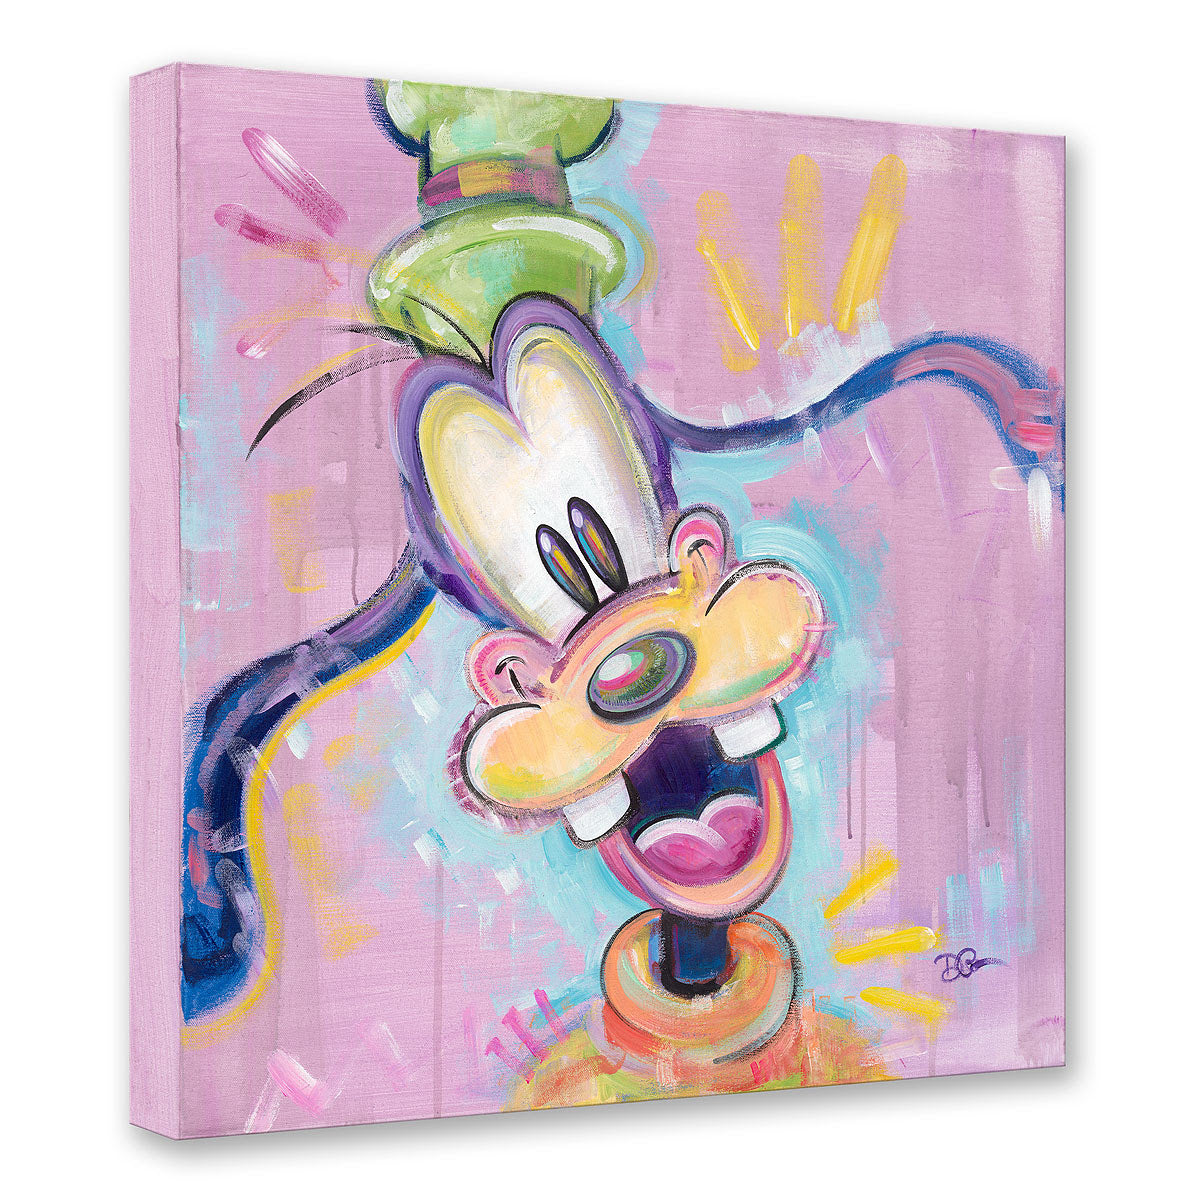 Naturally Goofy - Disney Treasure on Canvas